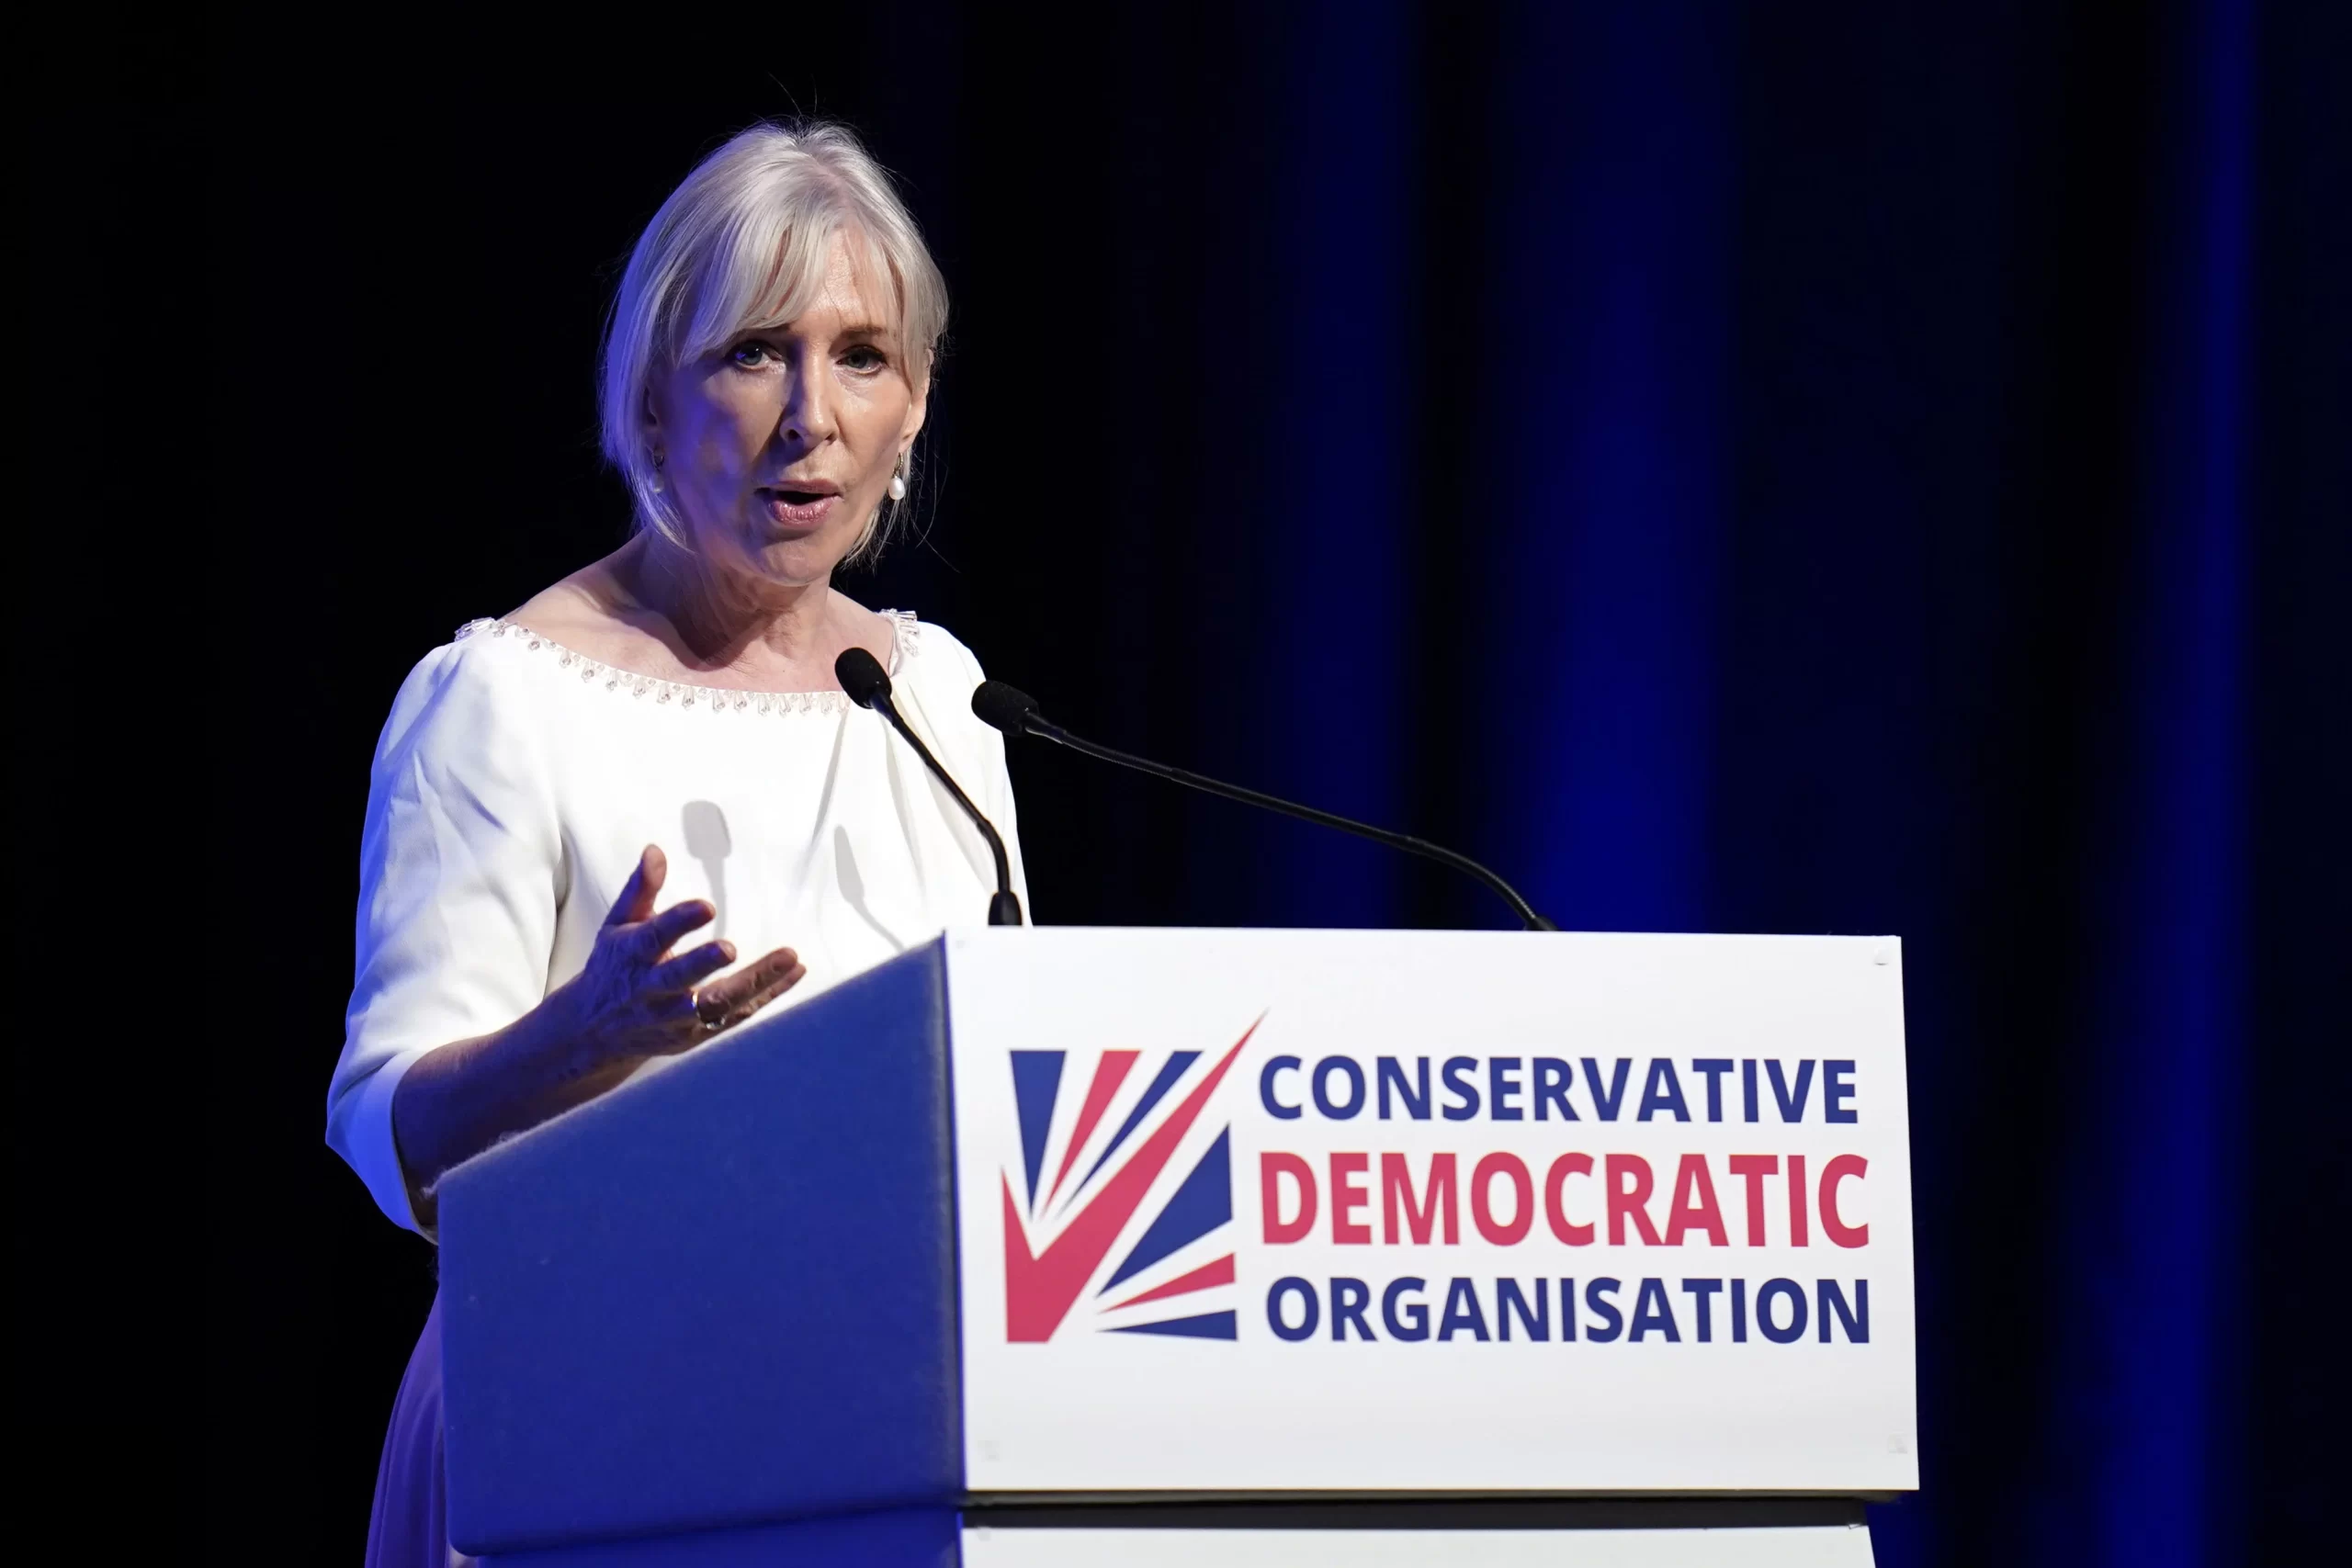 Nadine Dorries UK Politics: Prime Minister Questions Her Representation